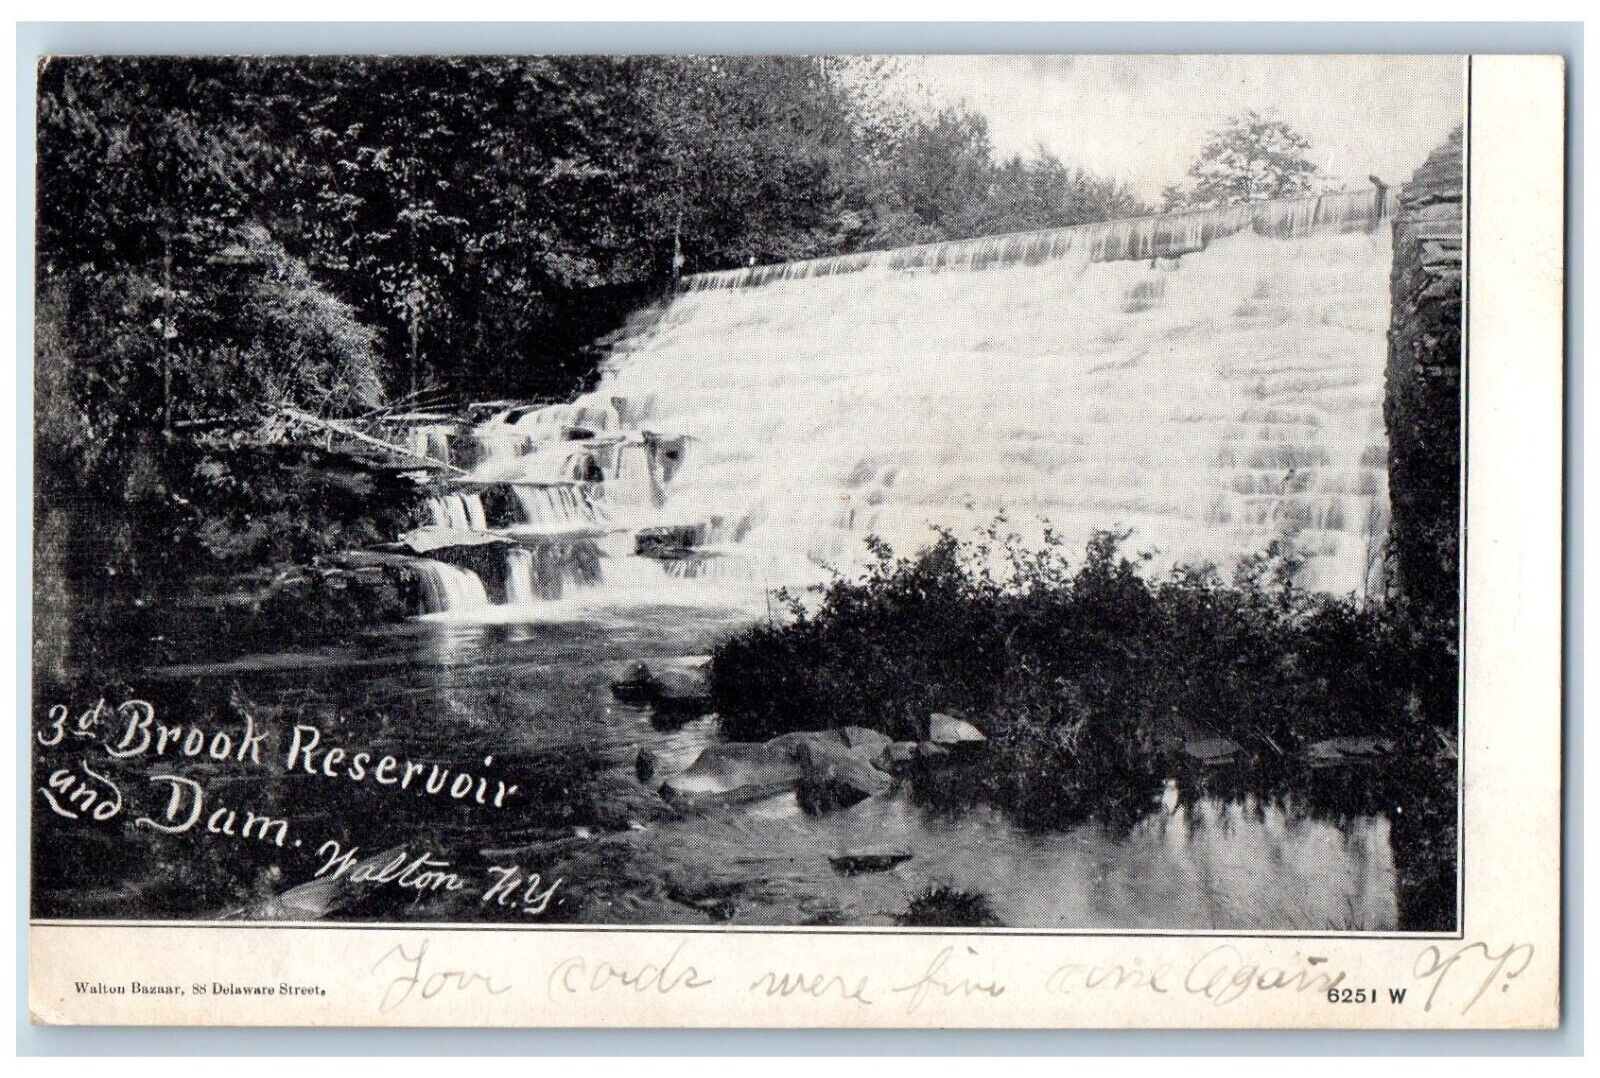 Walton New York NY Postcard 3rd Brook Reservoir And Dam Waterfalls c1905 Antique